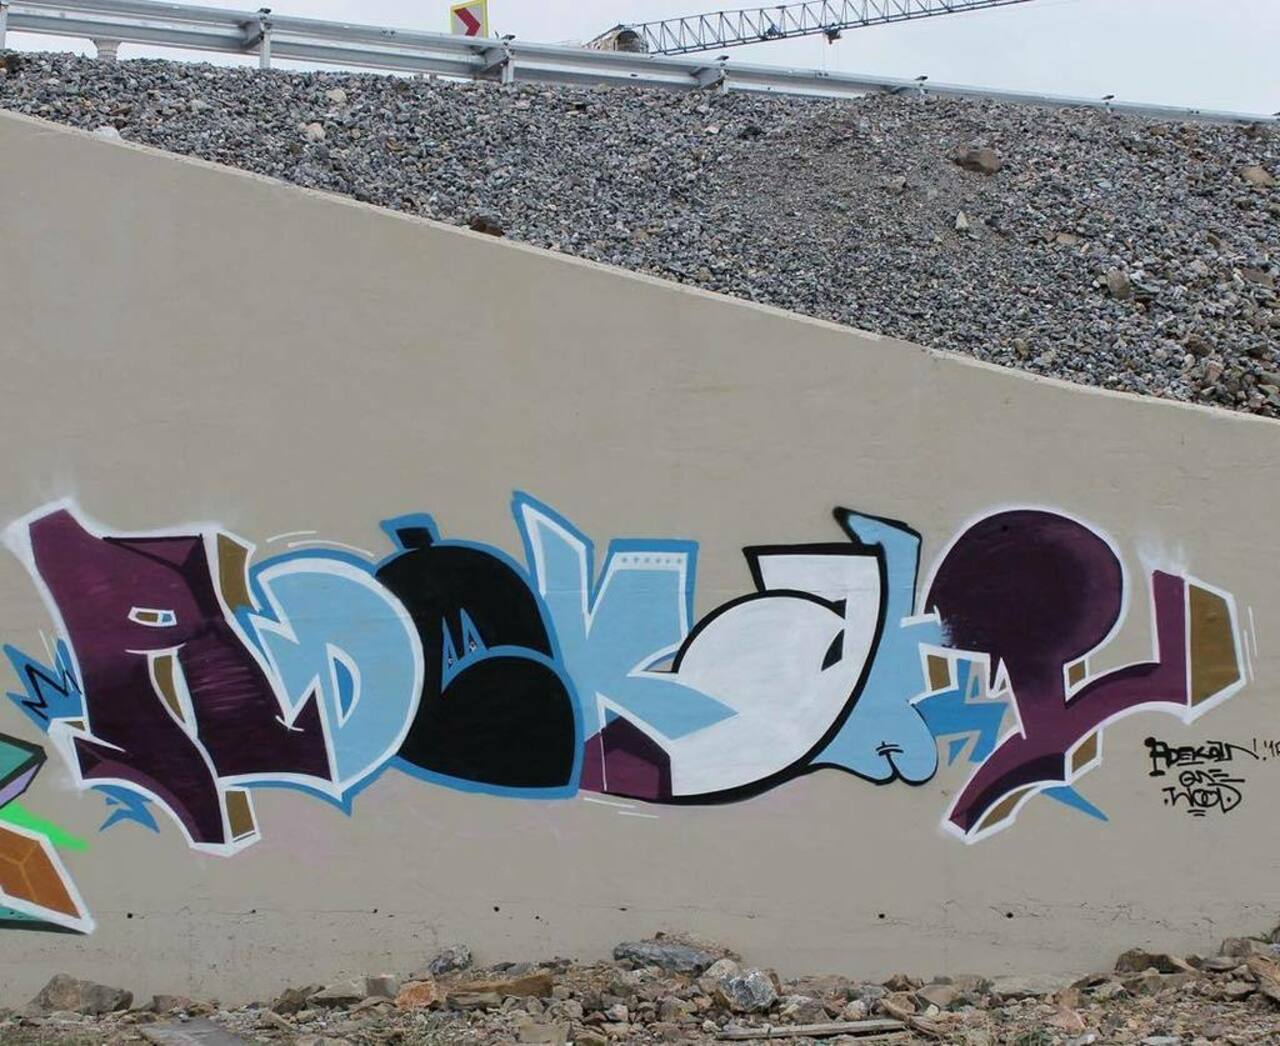 #adekan #graffiti #streetartistanbul #bombing #illegal #life #streetart #istanbul by adekan1 https://t.co/nbwYZ33tHd